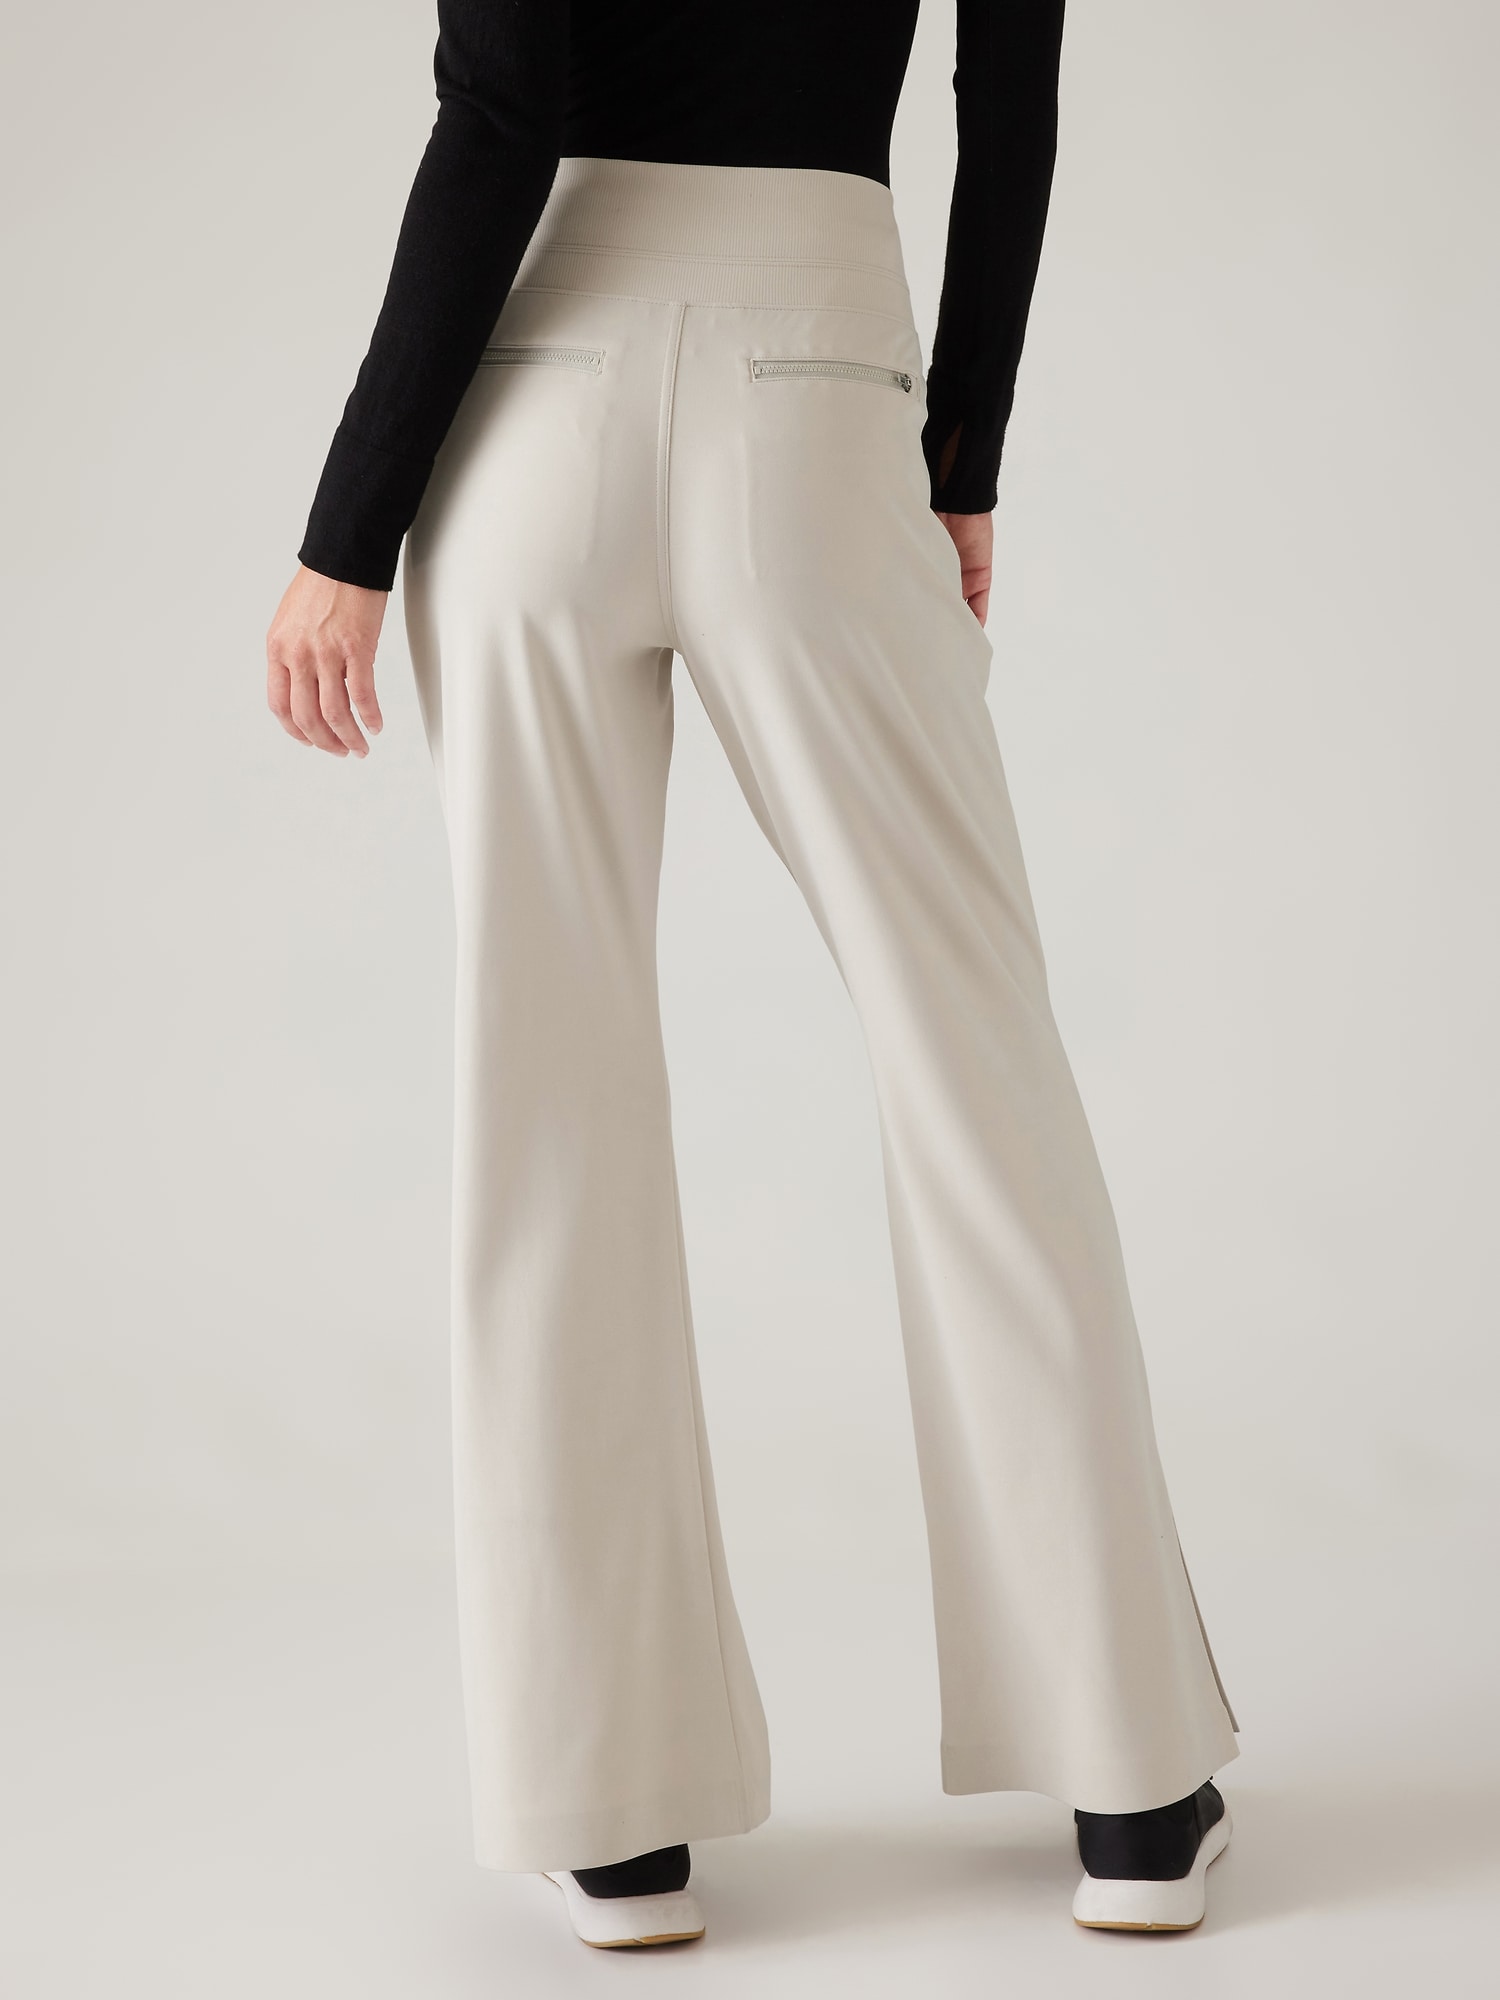 GAOKE High Waist Flare Pants For Women White Bell South Bottom, Slim Fit,  Elegant Work Wear From Lp2228, $15.6